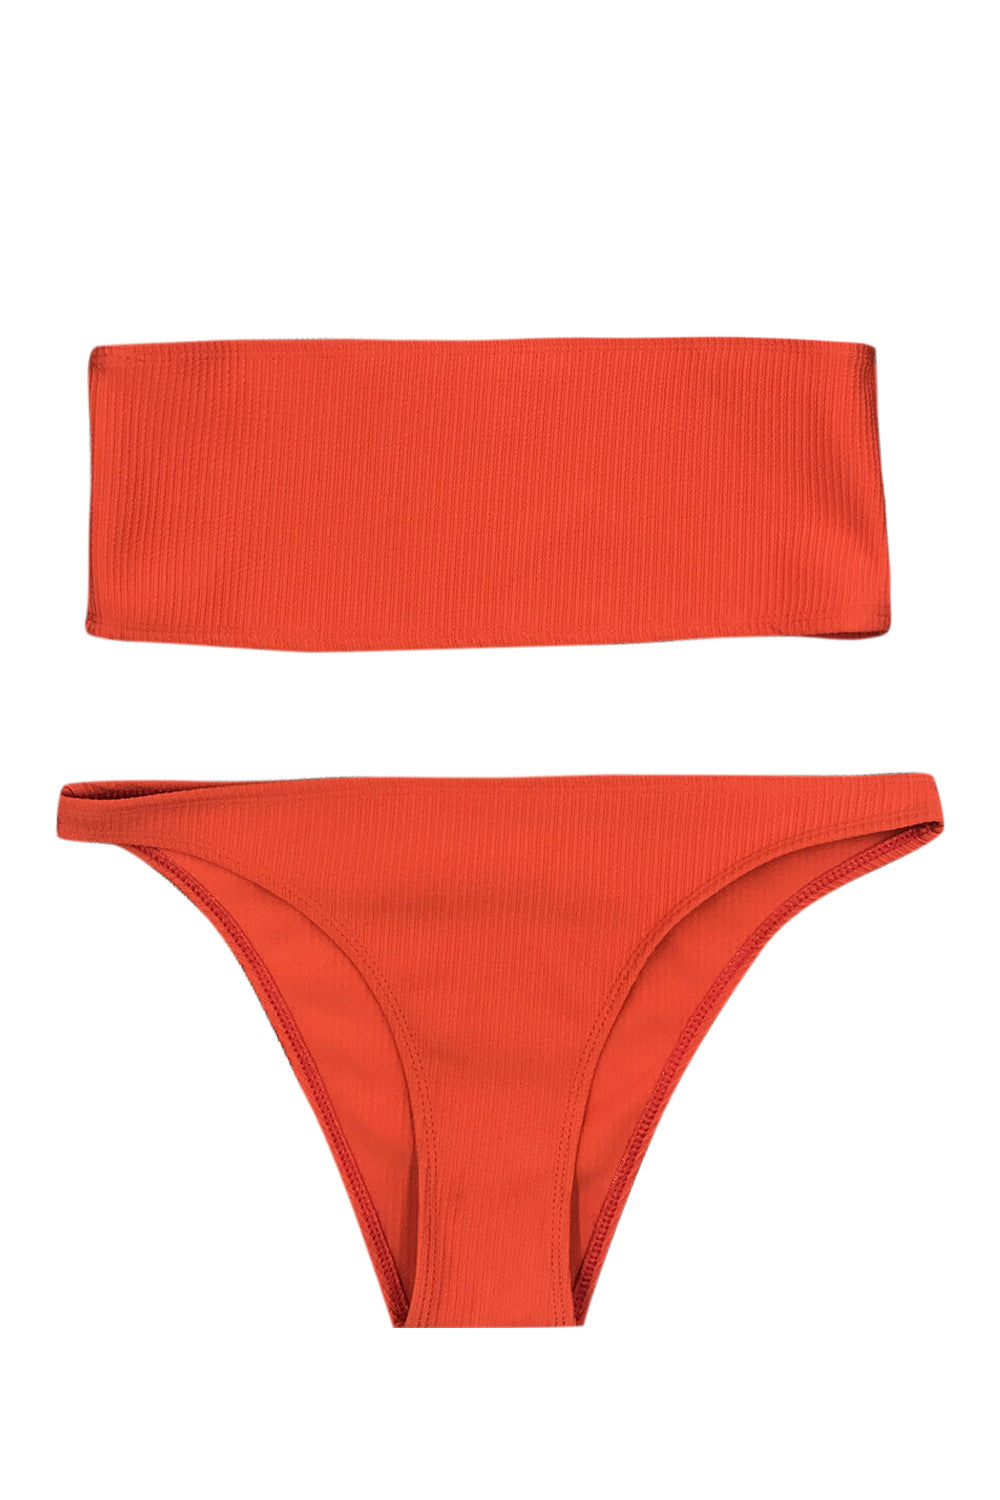 Iyasson Solid Color Rib Knit Strapless Bikini Sets